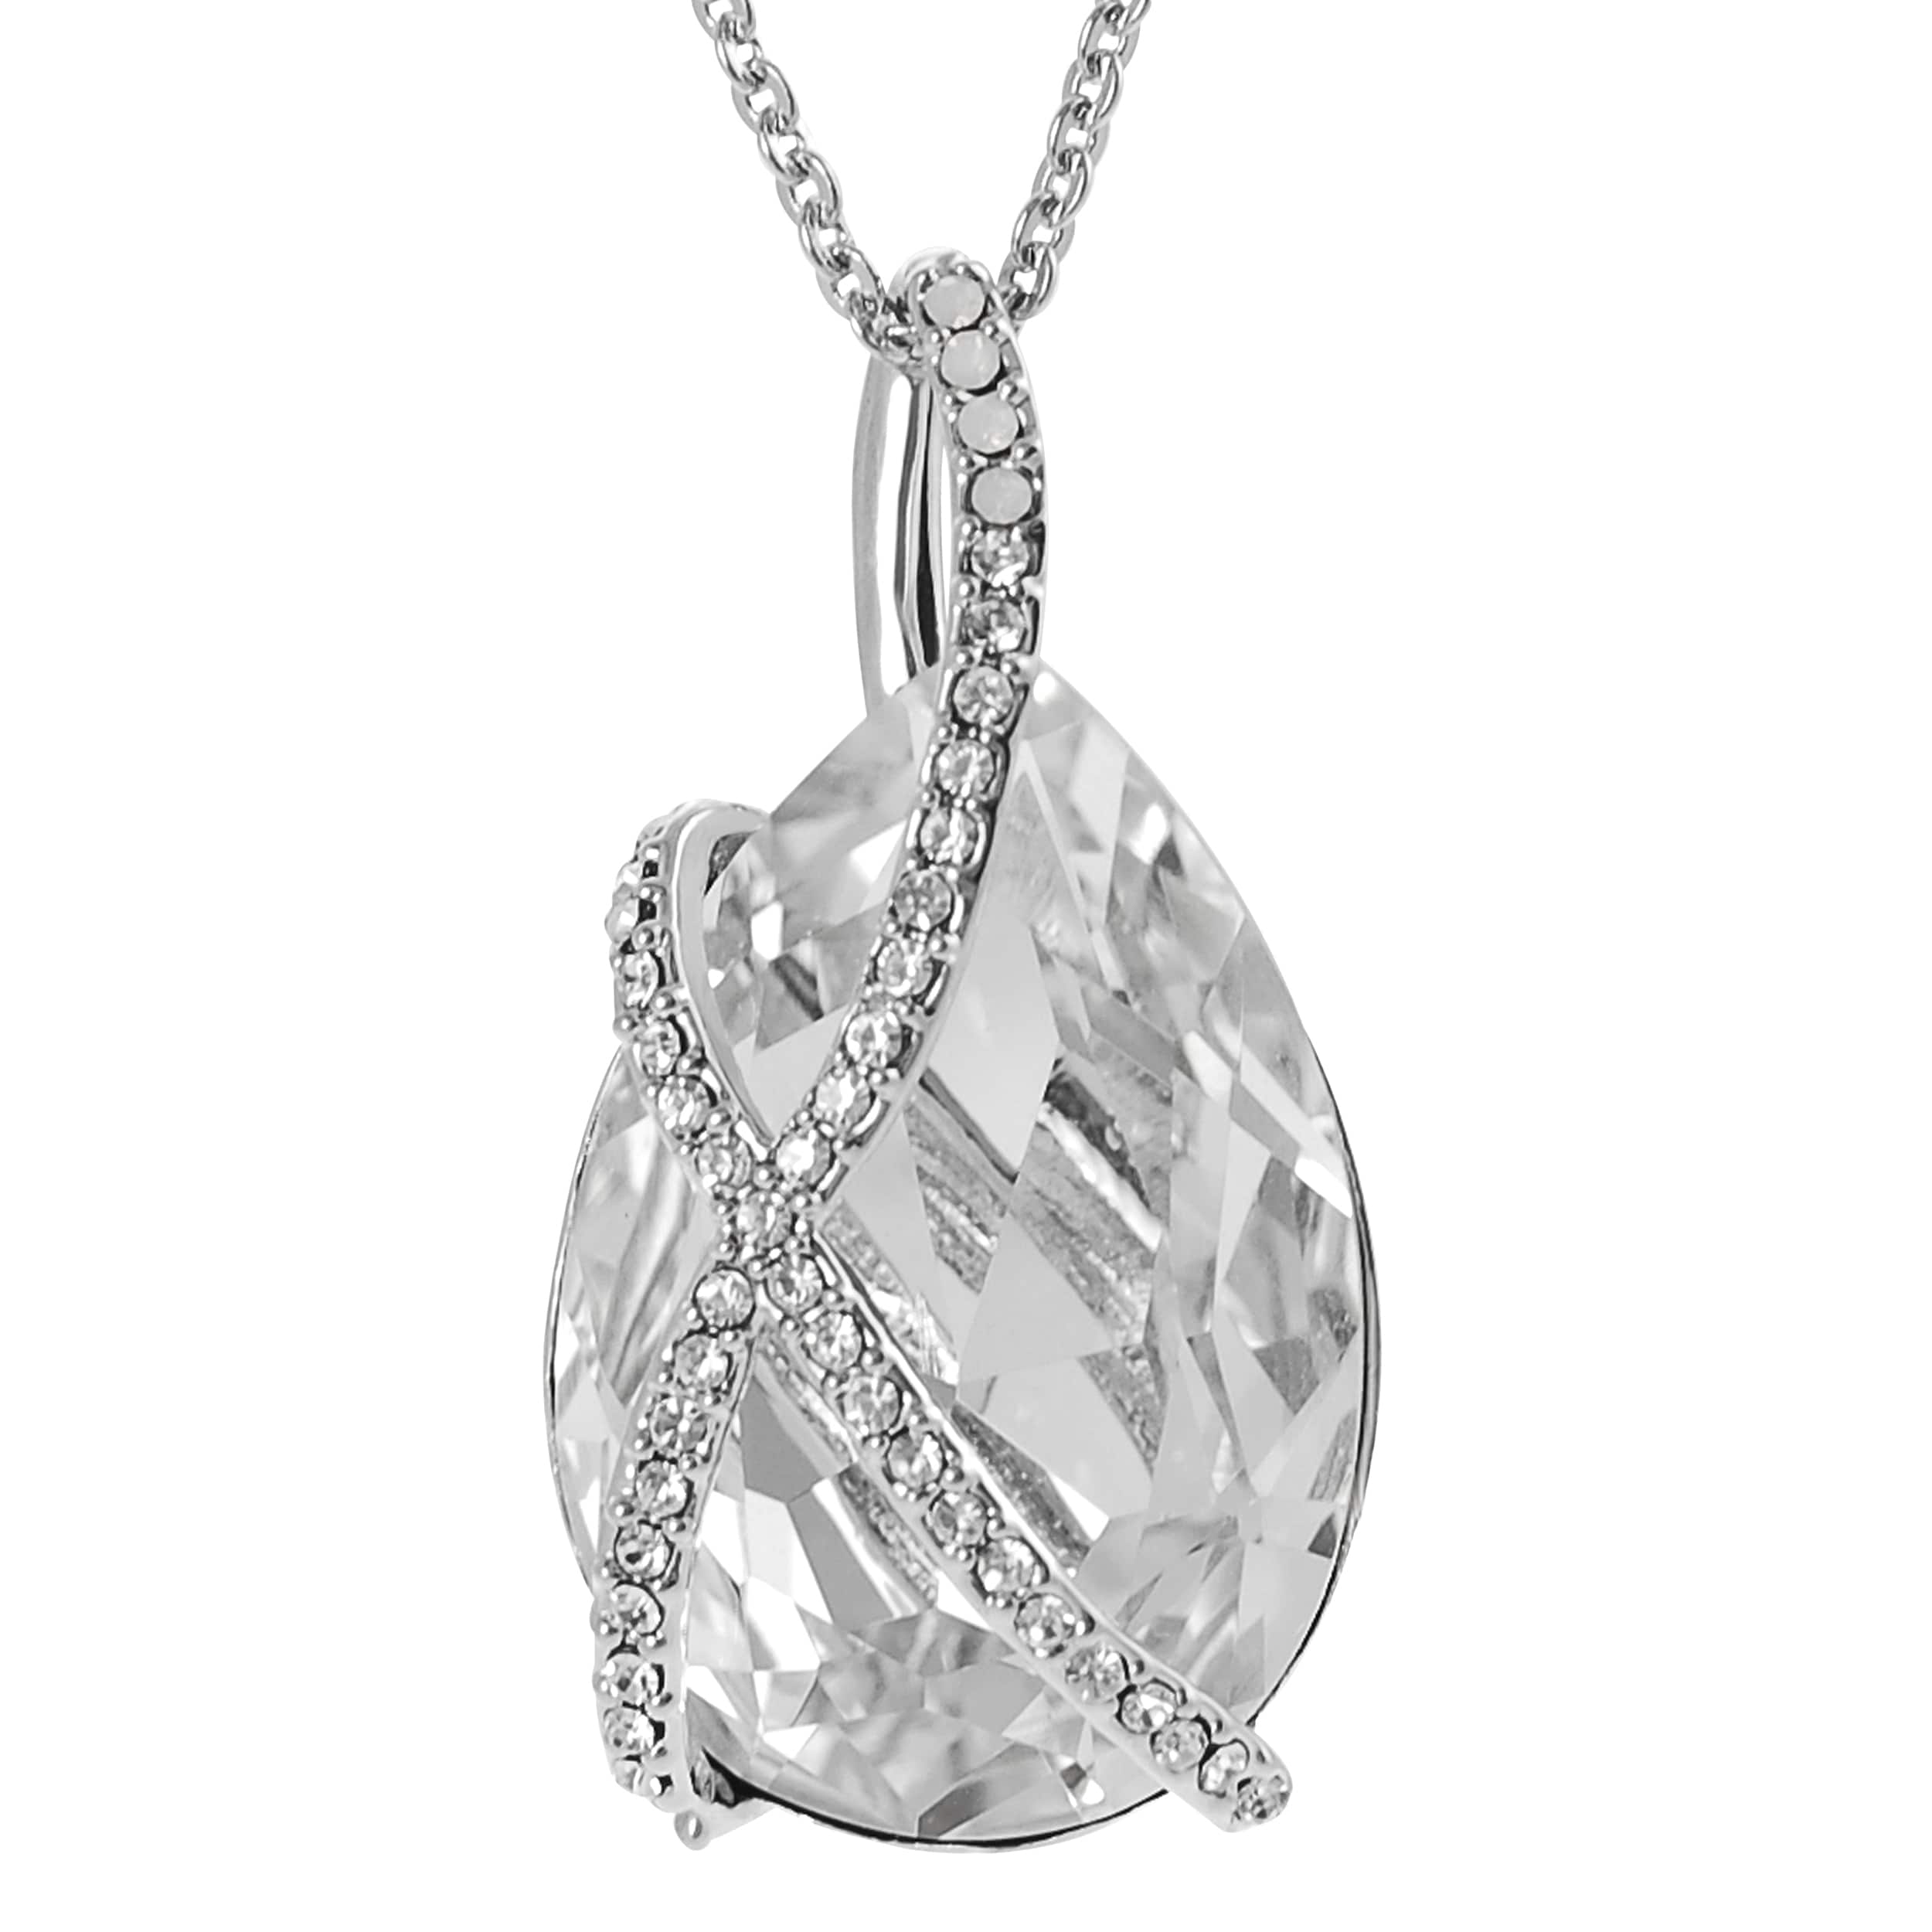 Journee Collection Silvertone Large Swarovski Crystal Drop Necklace